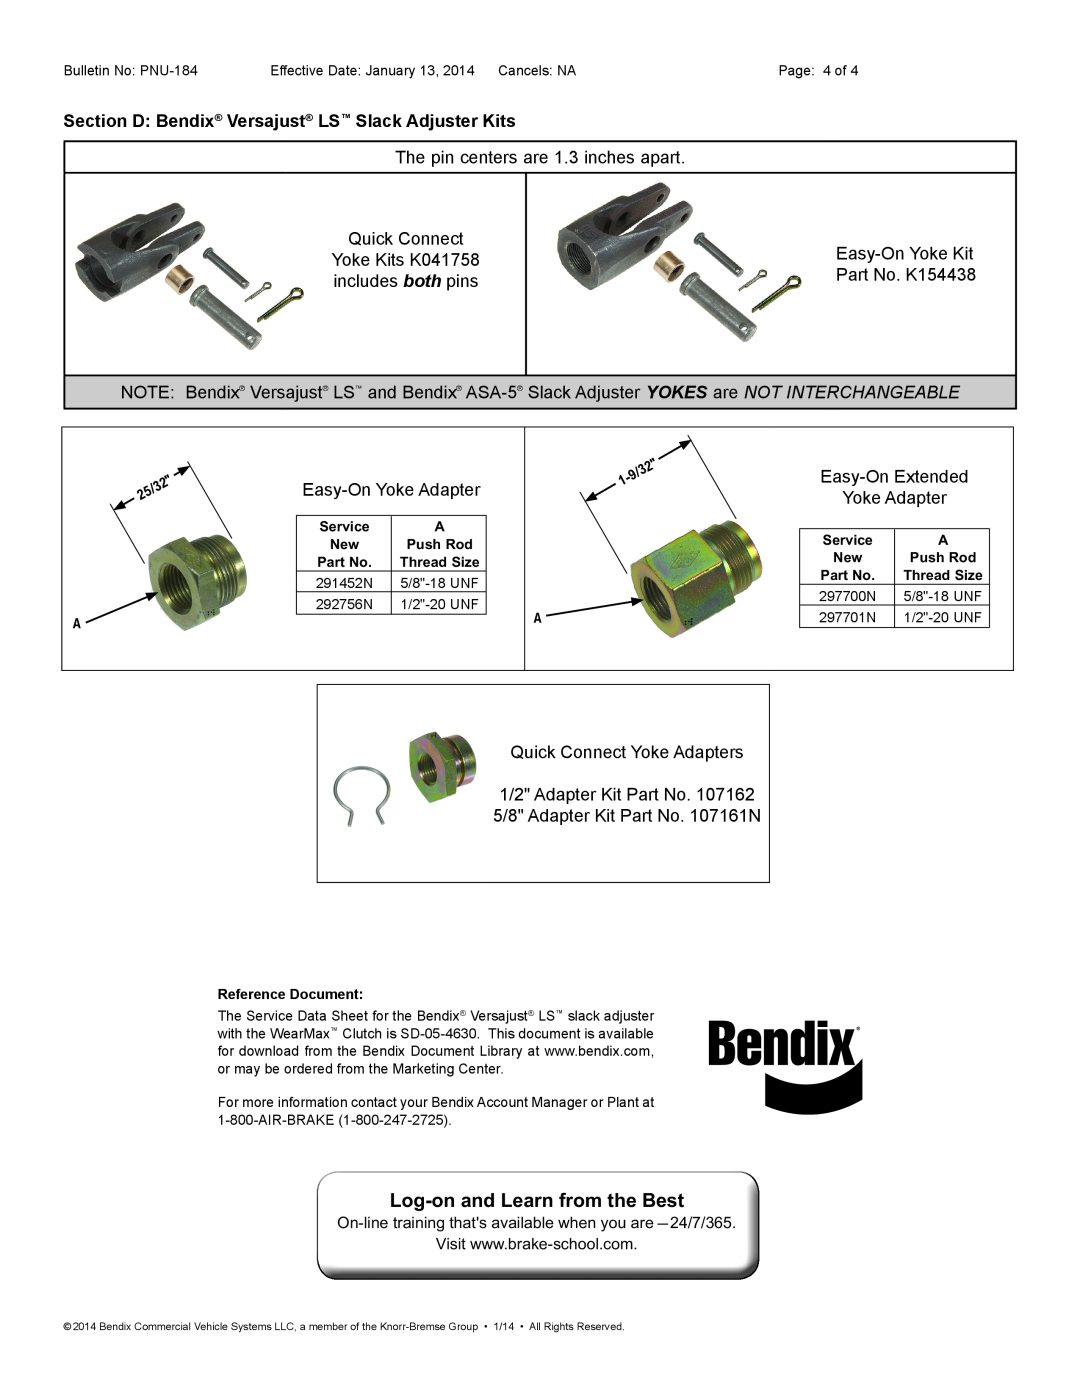 BENDIX PNU-184 manual Section D Bendix Versajust LS Slack Adjuster Kits, Log-on and Learn from the Best 